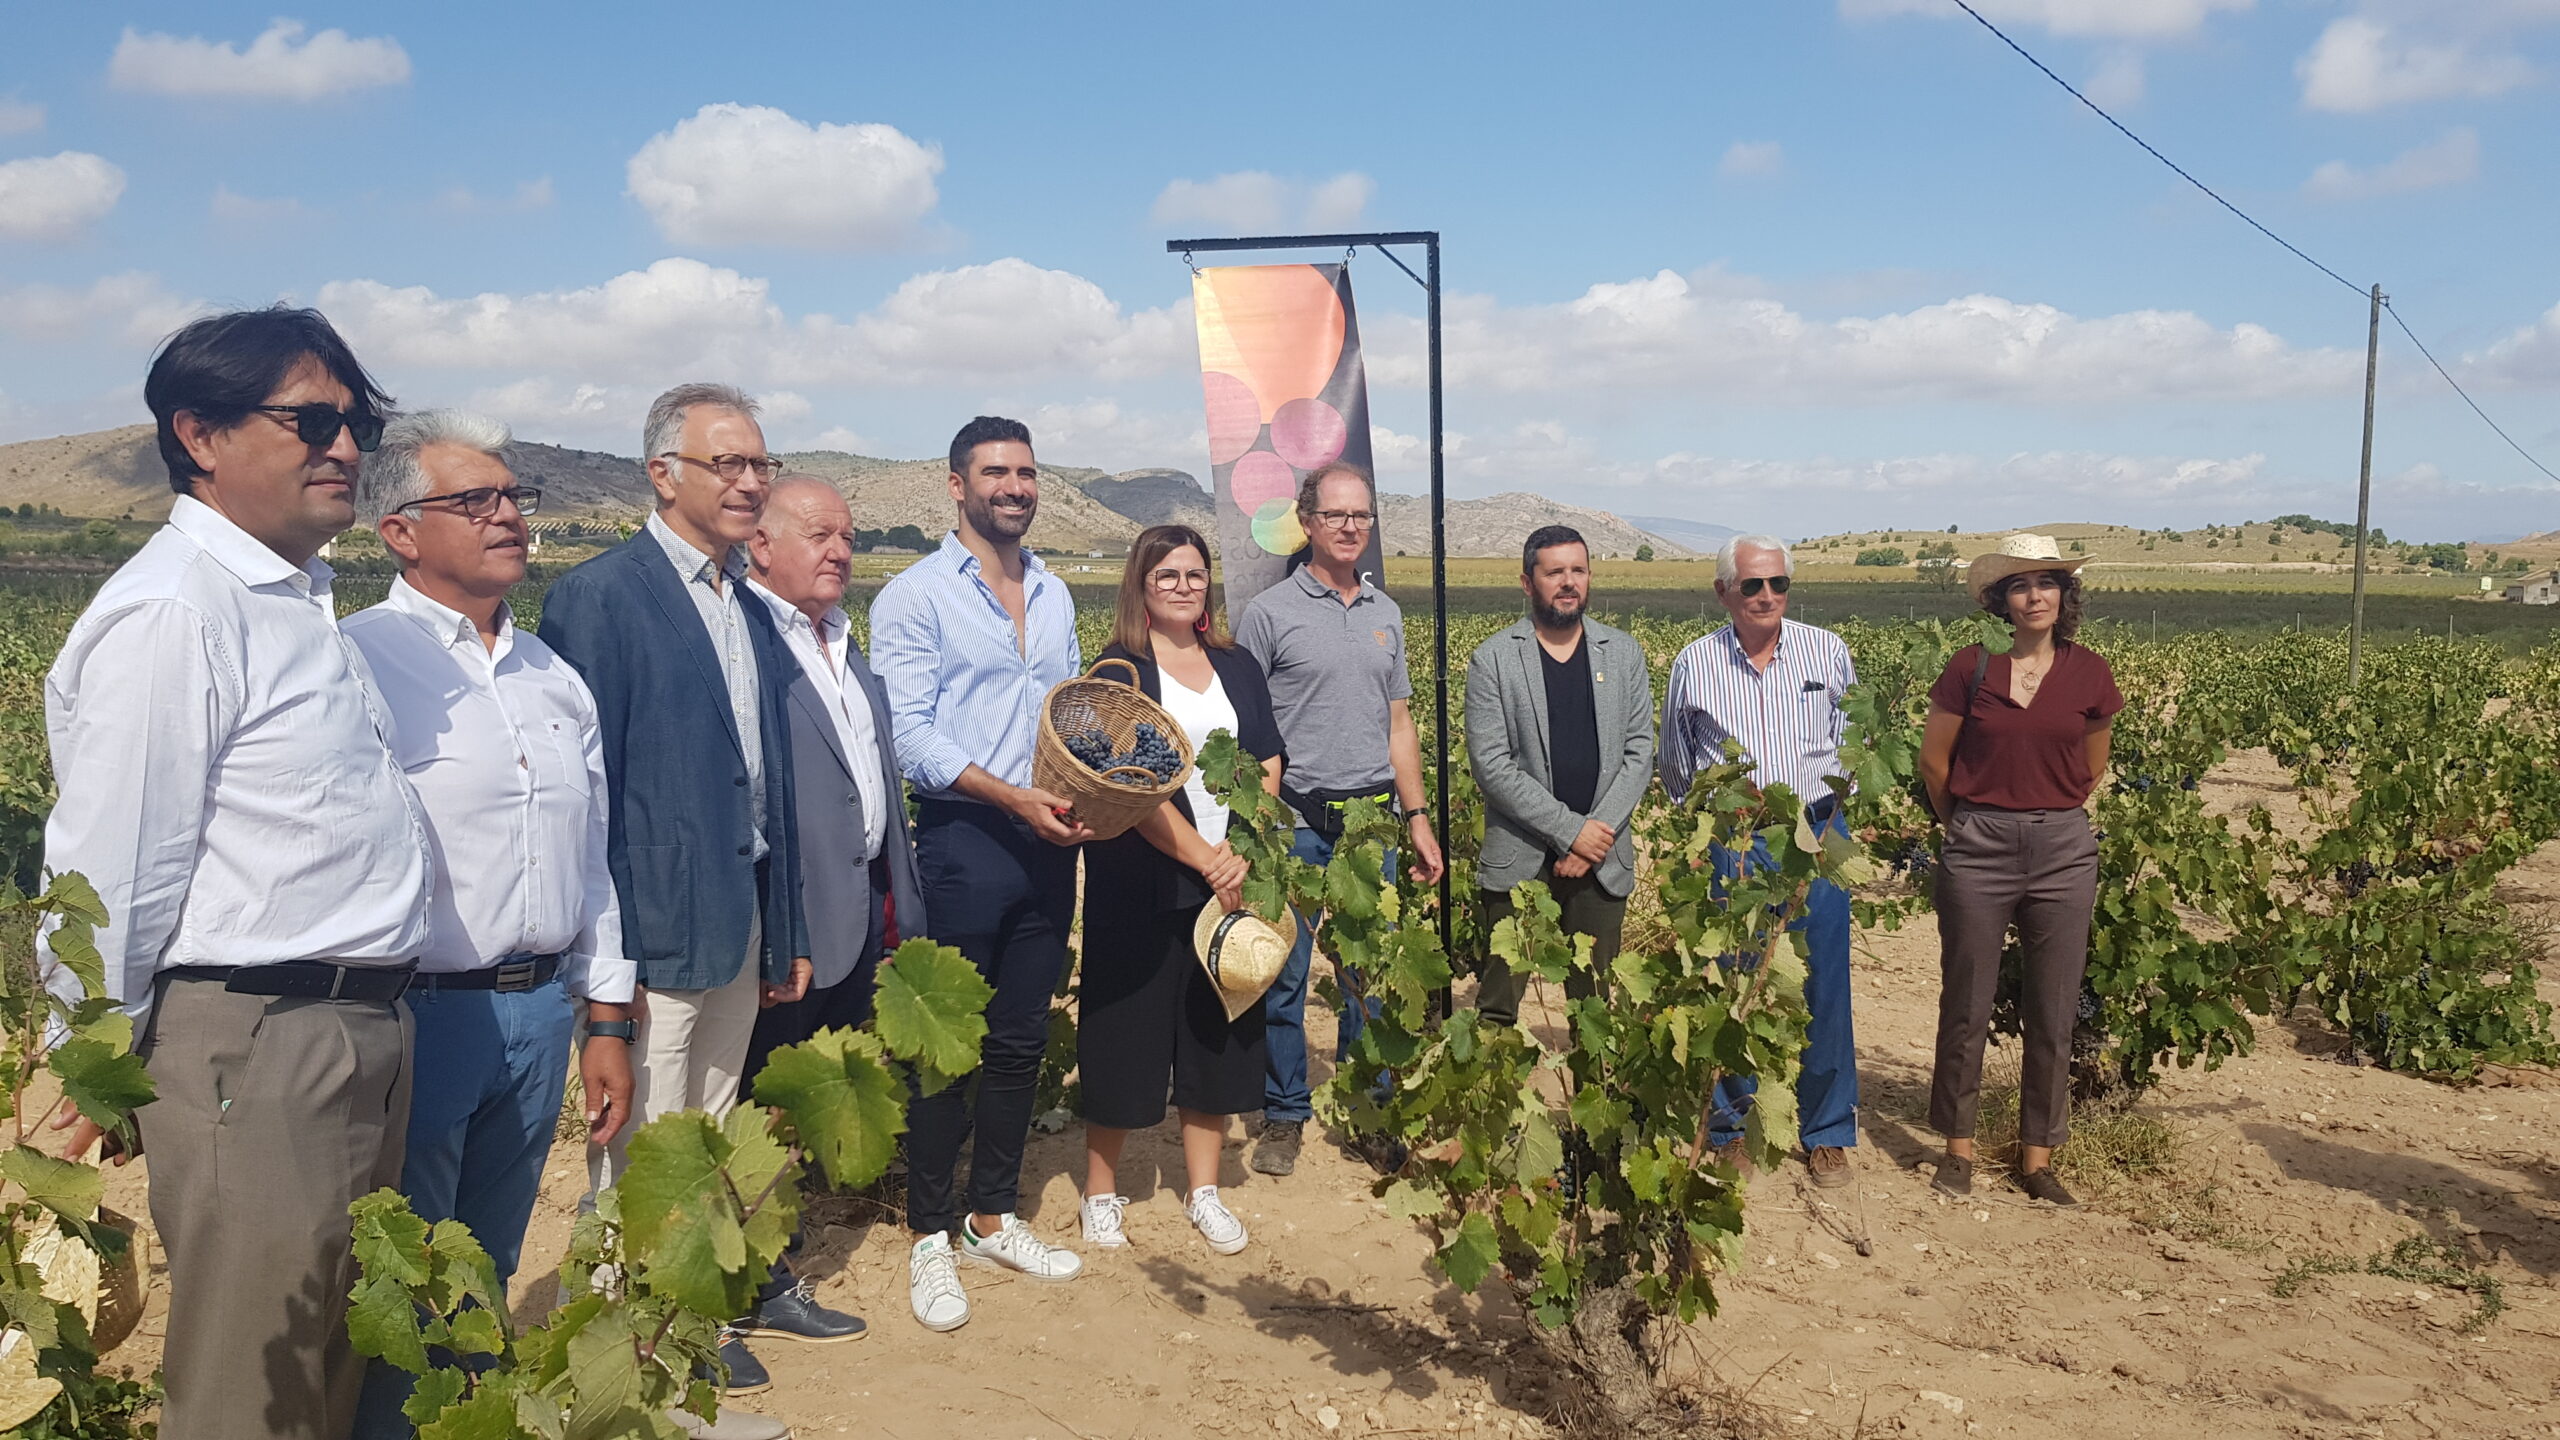 La DEO del vino de Alicante espera recoger 17 millones de kilos de uva esta cosecha